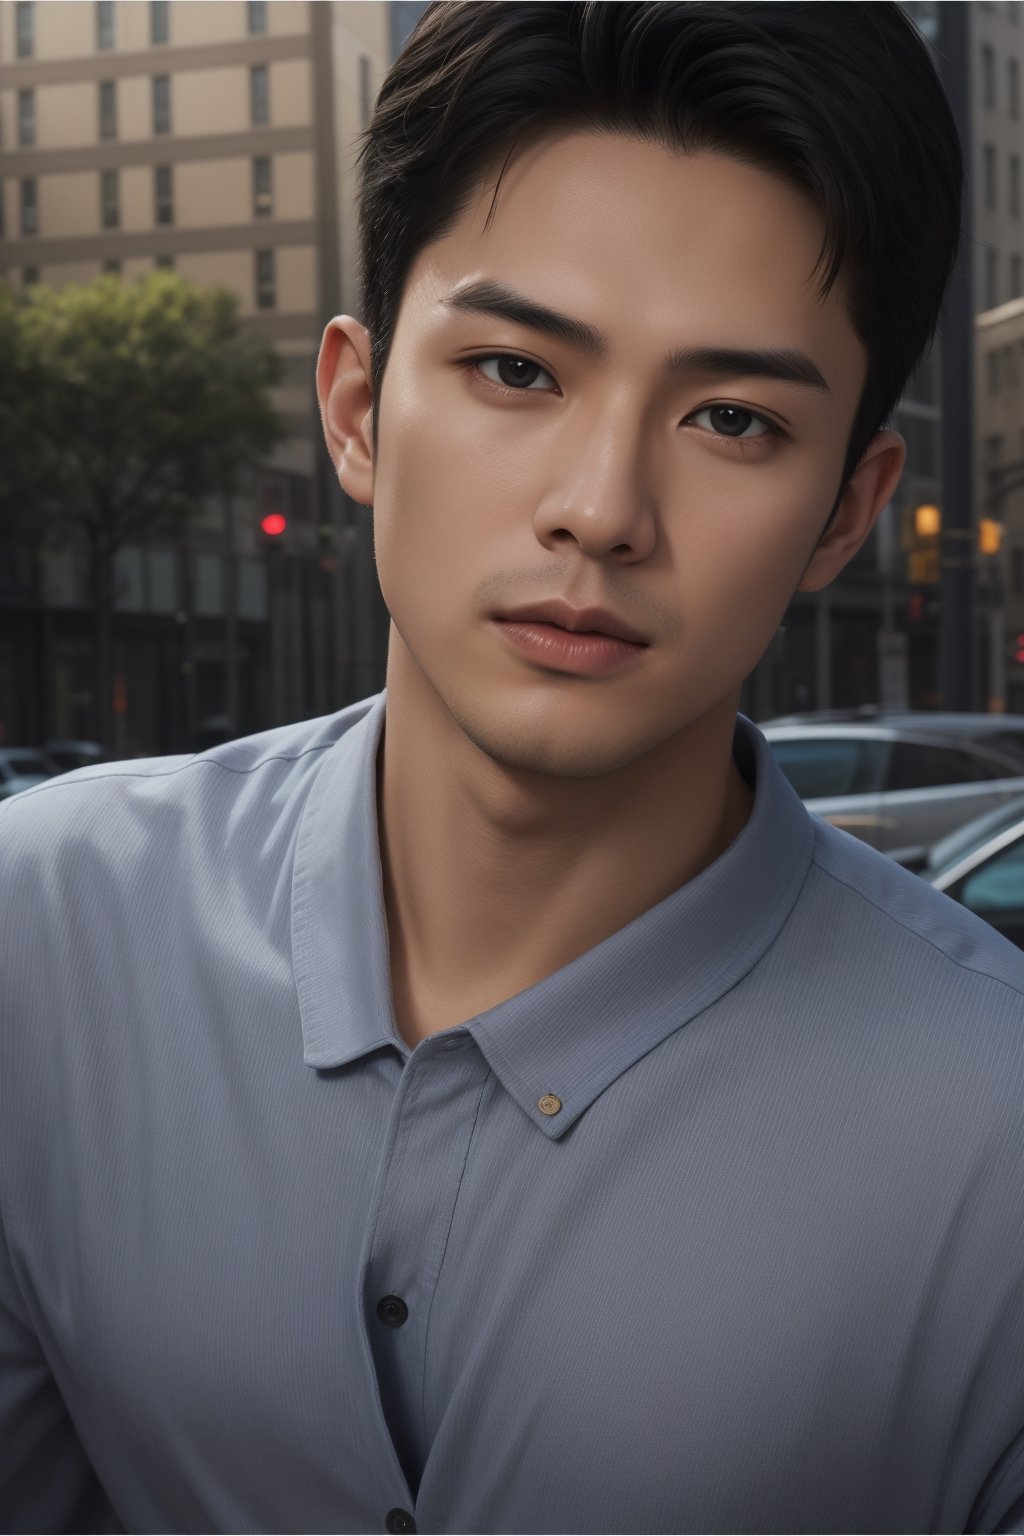 Asian man,handsome,age 30,tall 187cm,short_hair,standing,walking on NEW YORK street,wear_suit,drive blue Lamborghini sport car,
natual sun light.